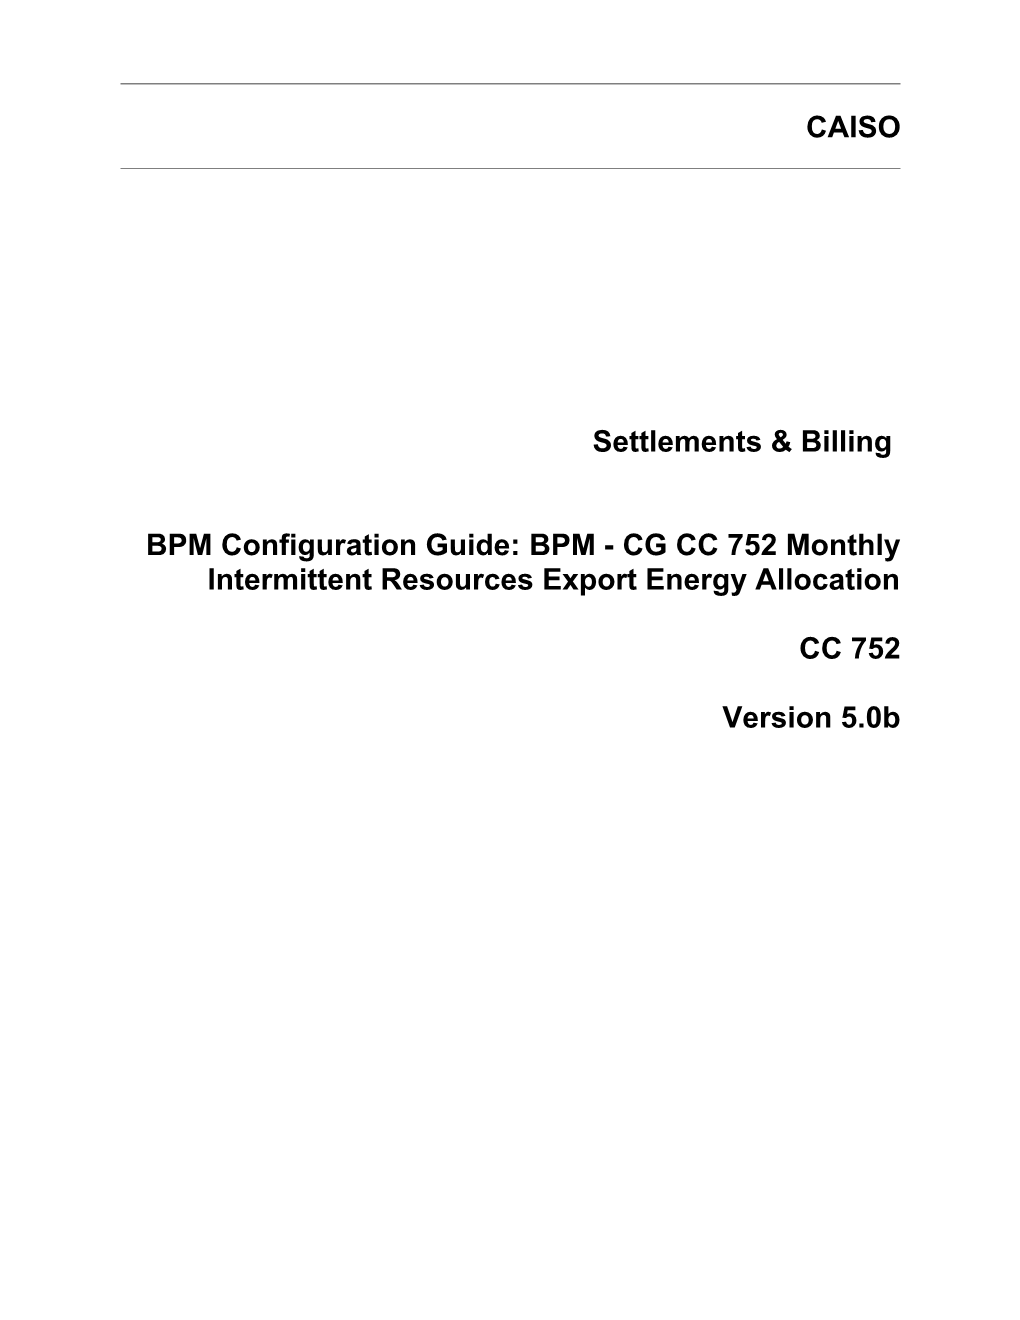 BPM - CG CC 752 Monthly Intermittent Resources Export Energy Allocation